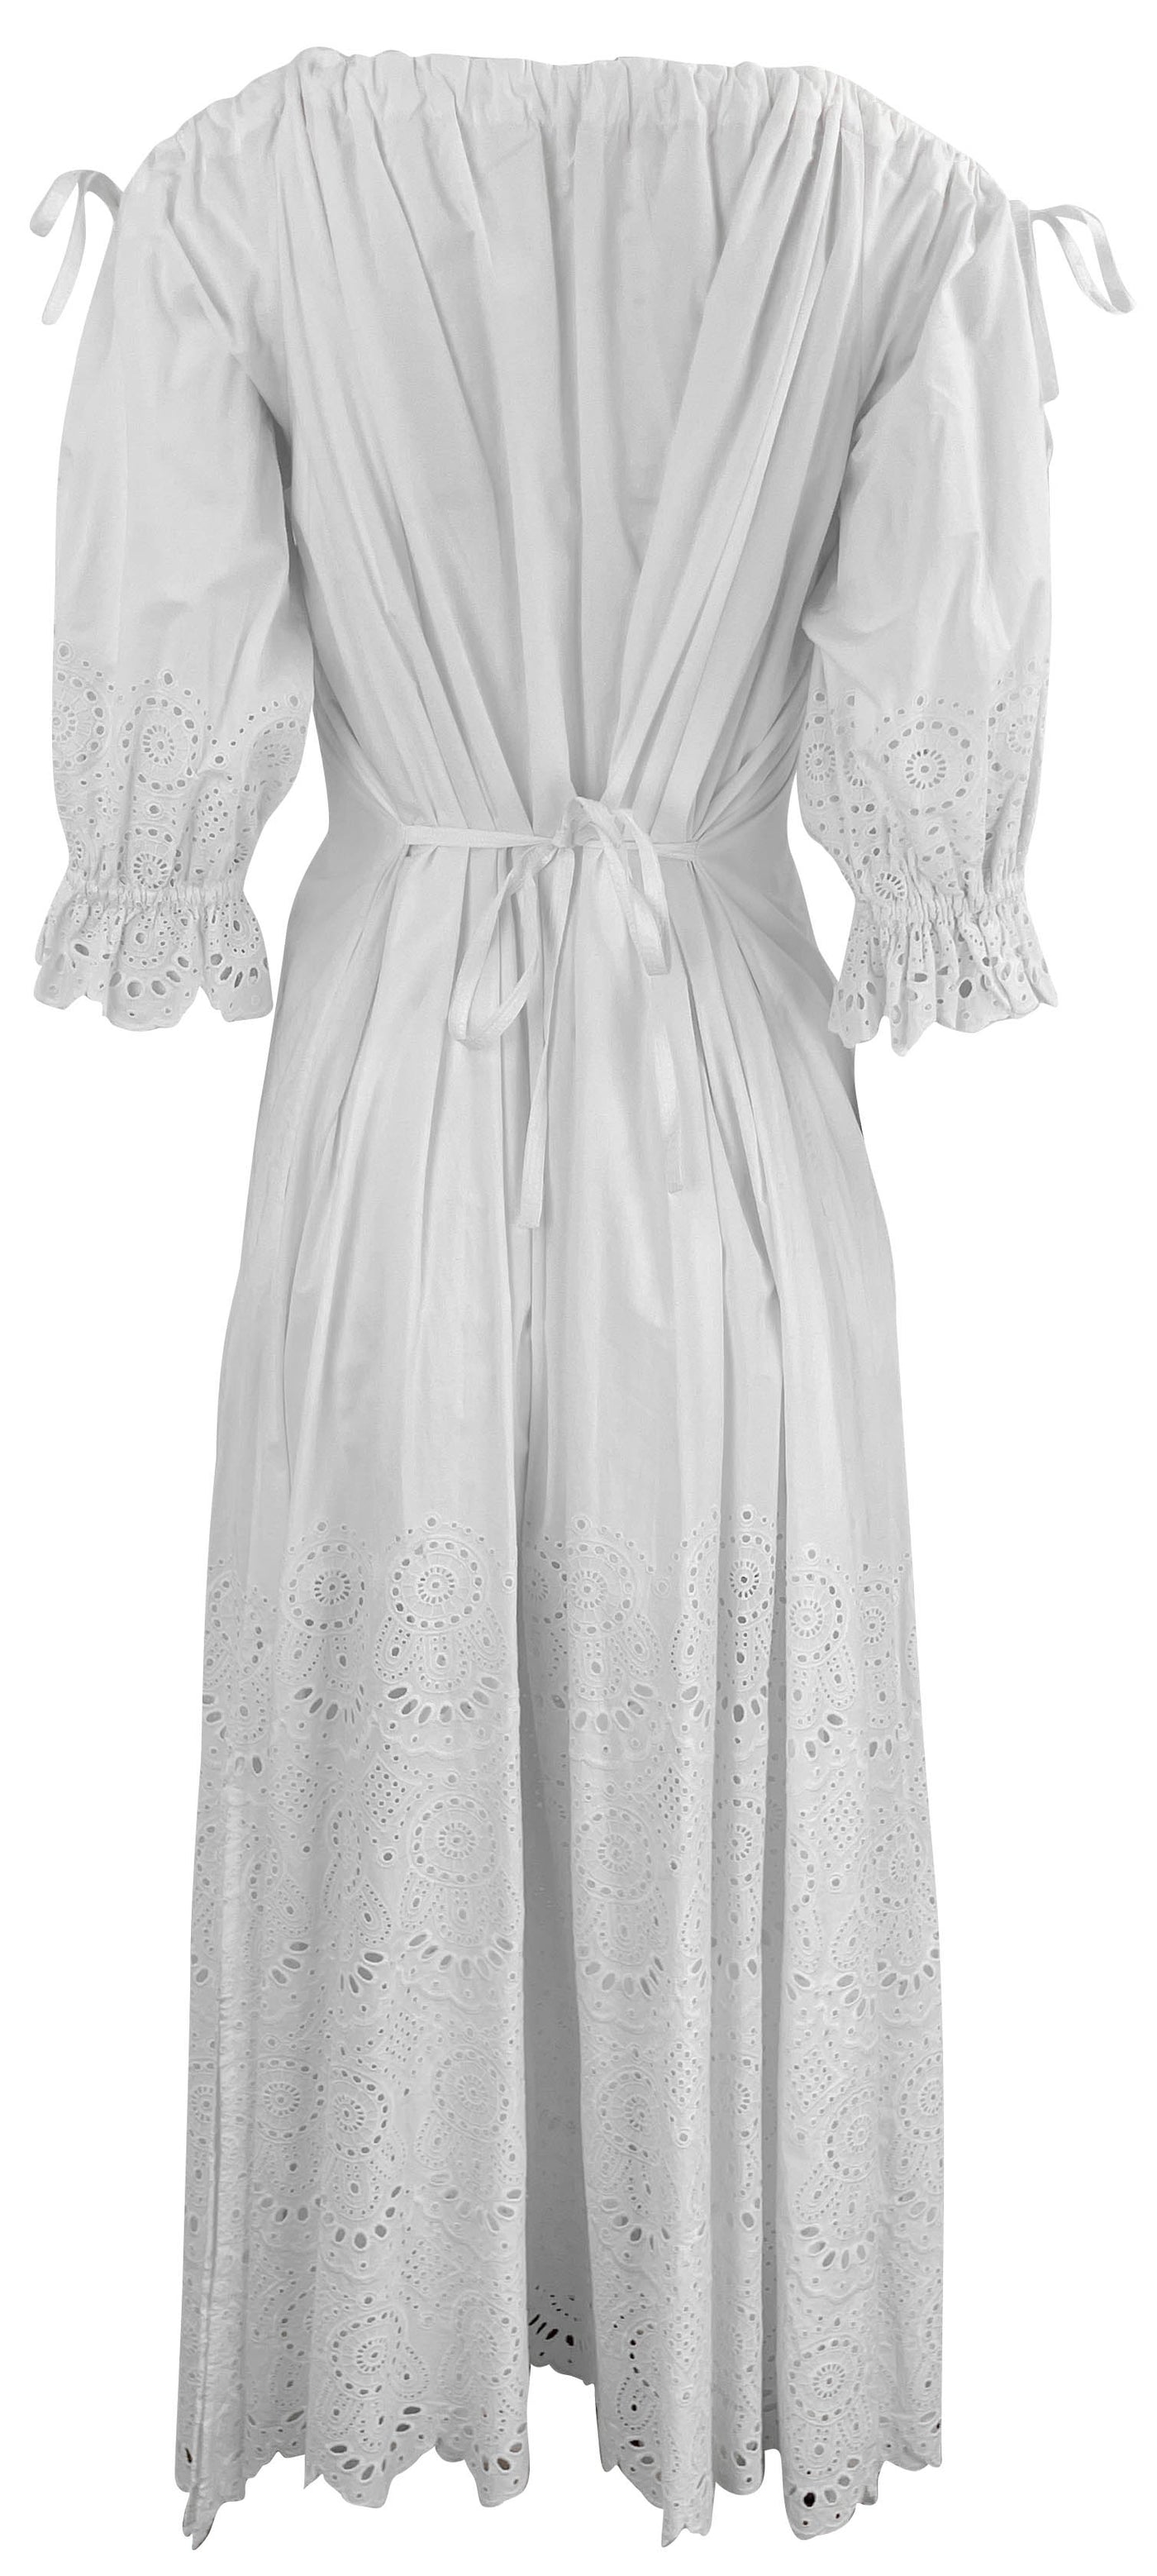 Ulla Johnson Narcisa Eyelet Dress in White - Discounts on Ulla Johnson at UAL